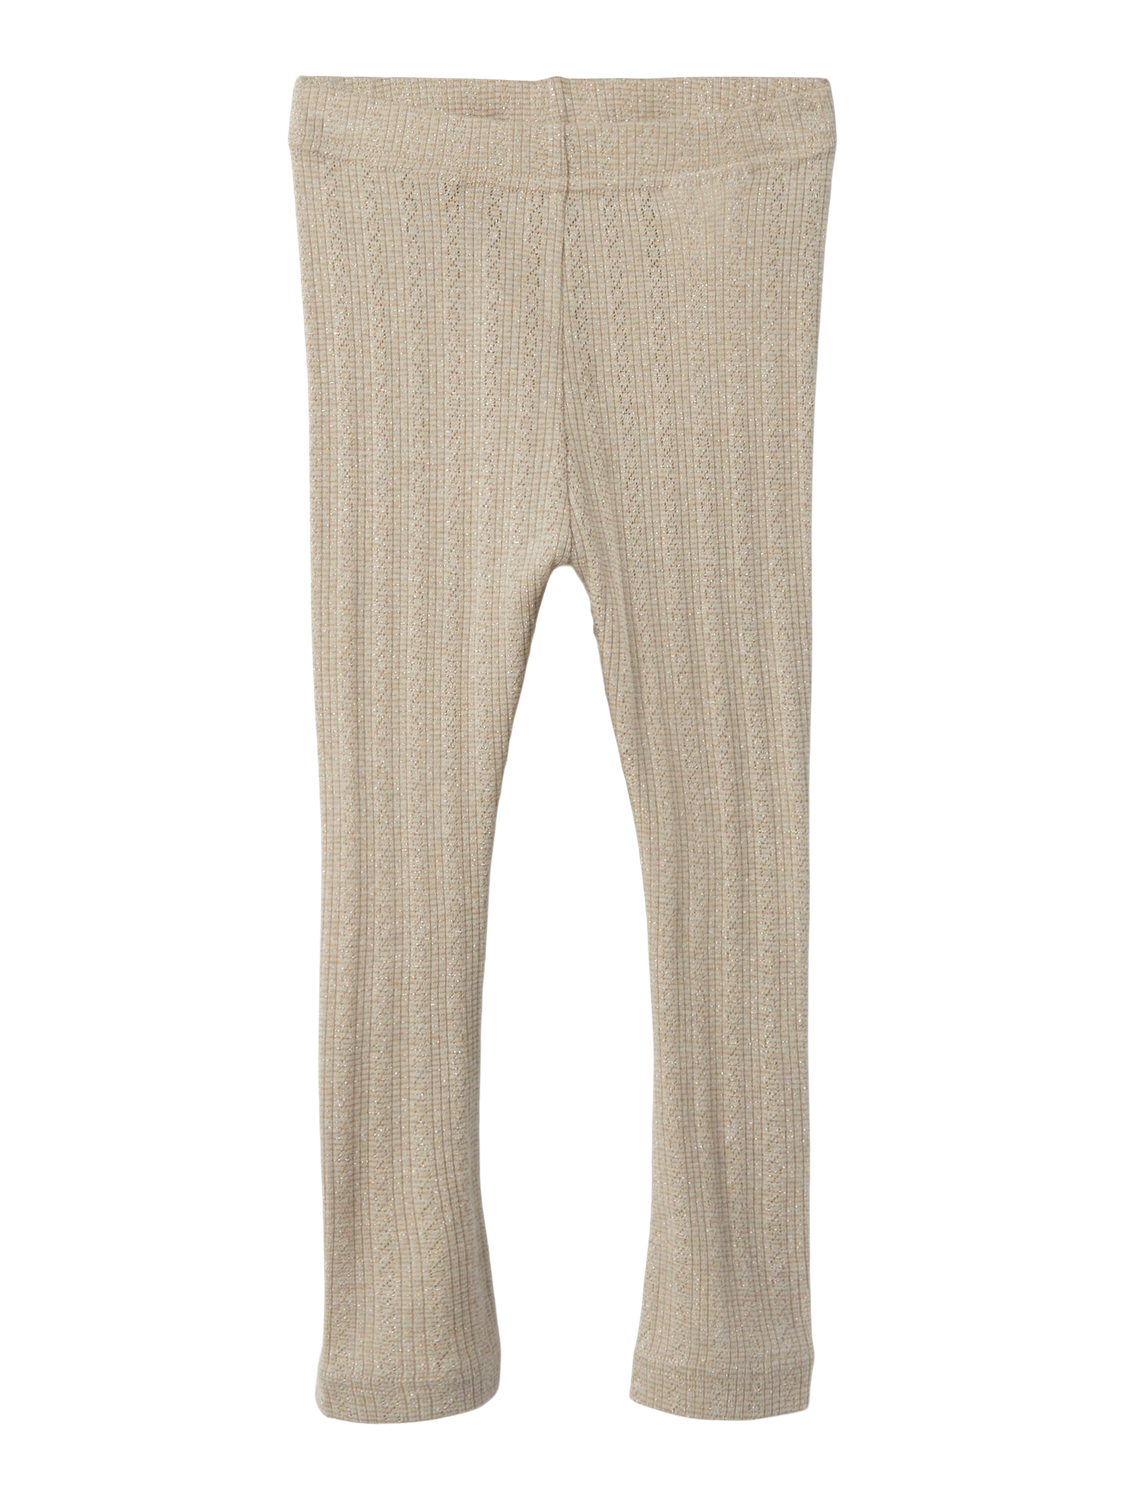 NMFOHUSA Trousers - Pure Cashmere